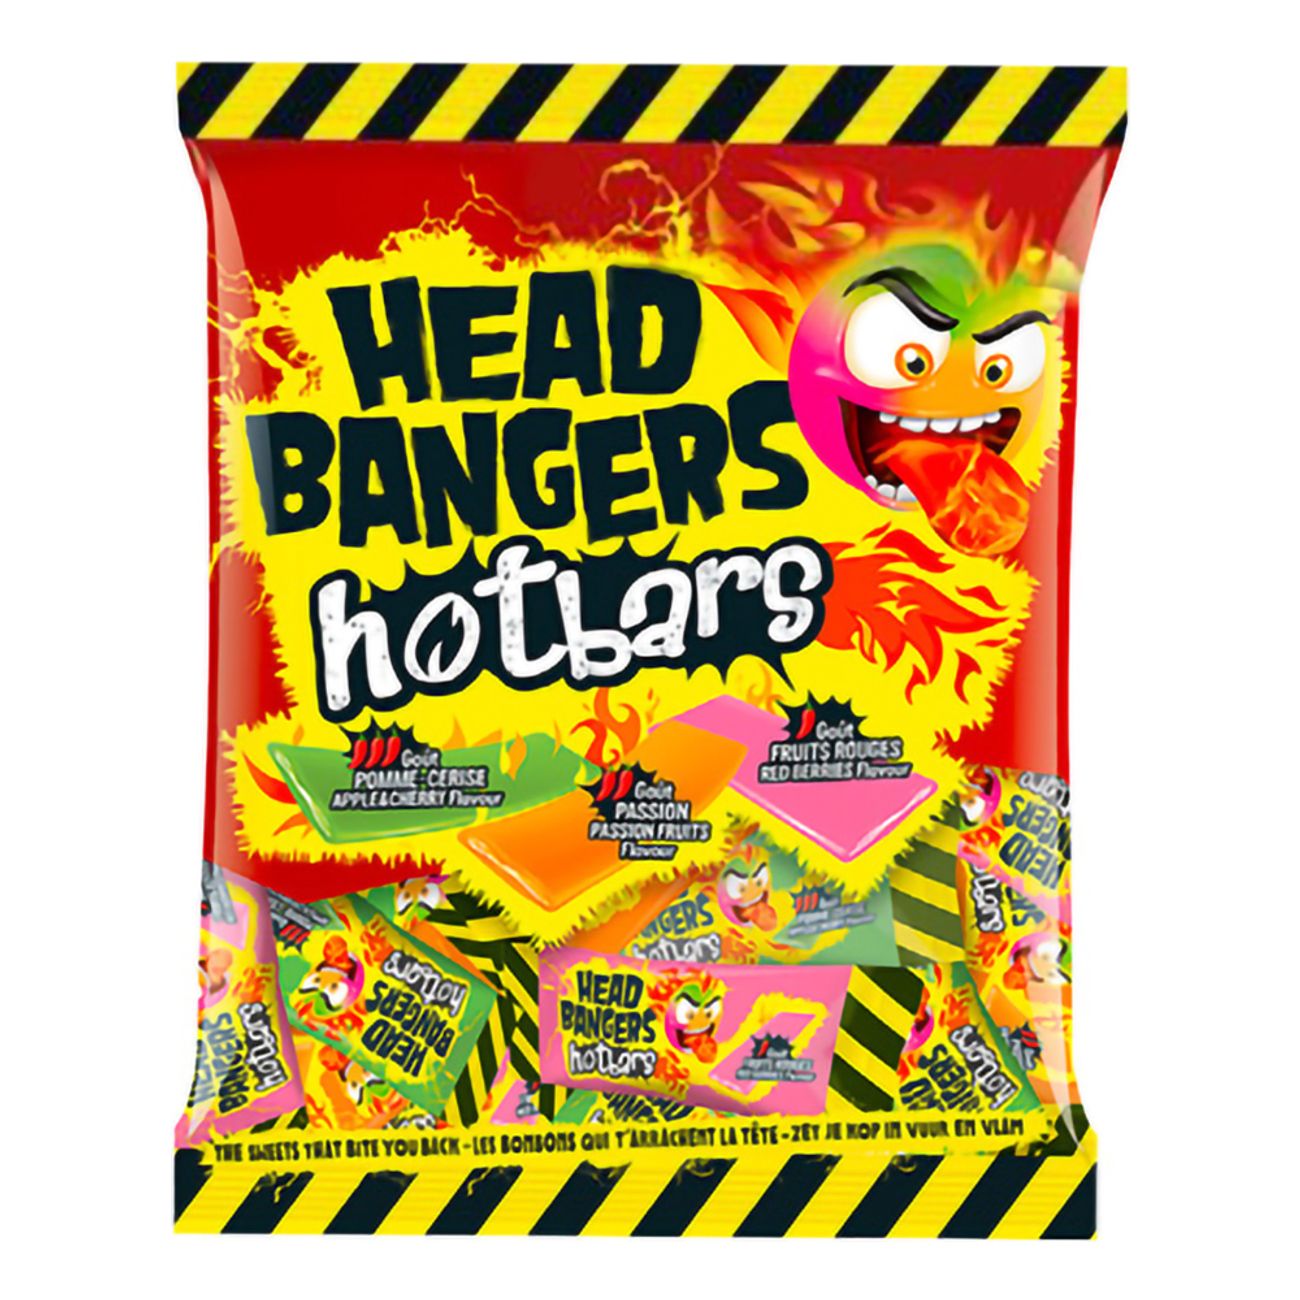 head-bangers-hotbars-101840-1